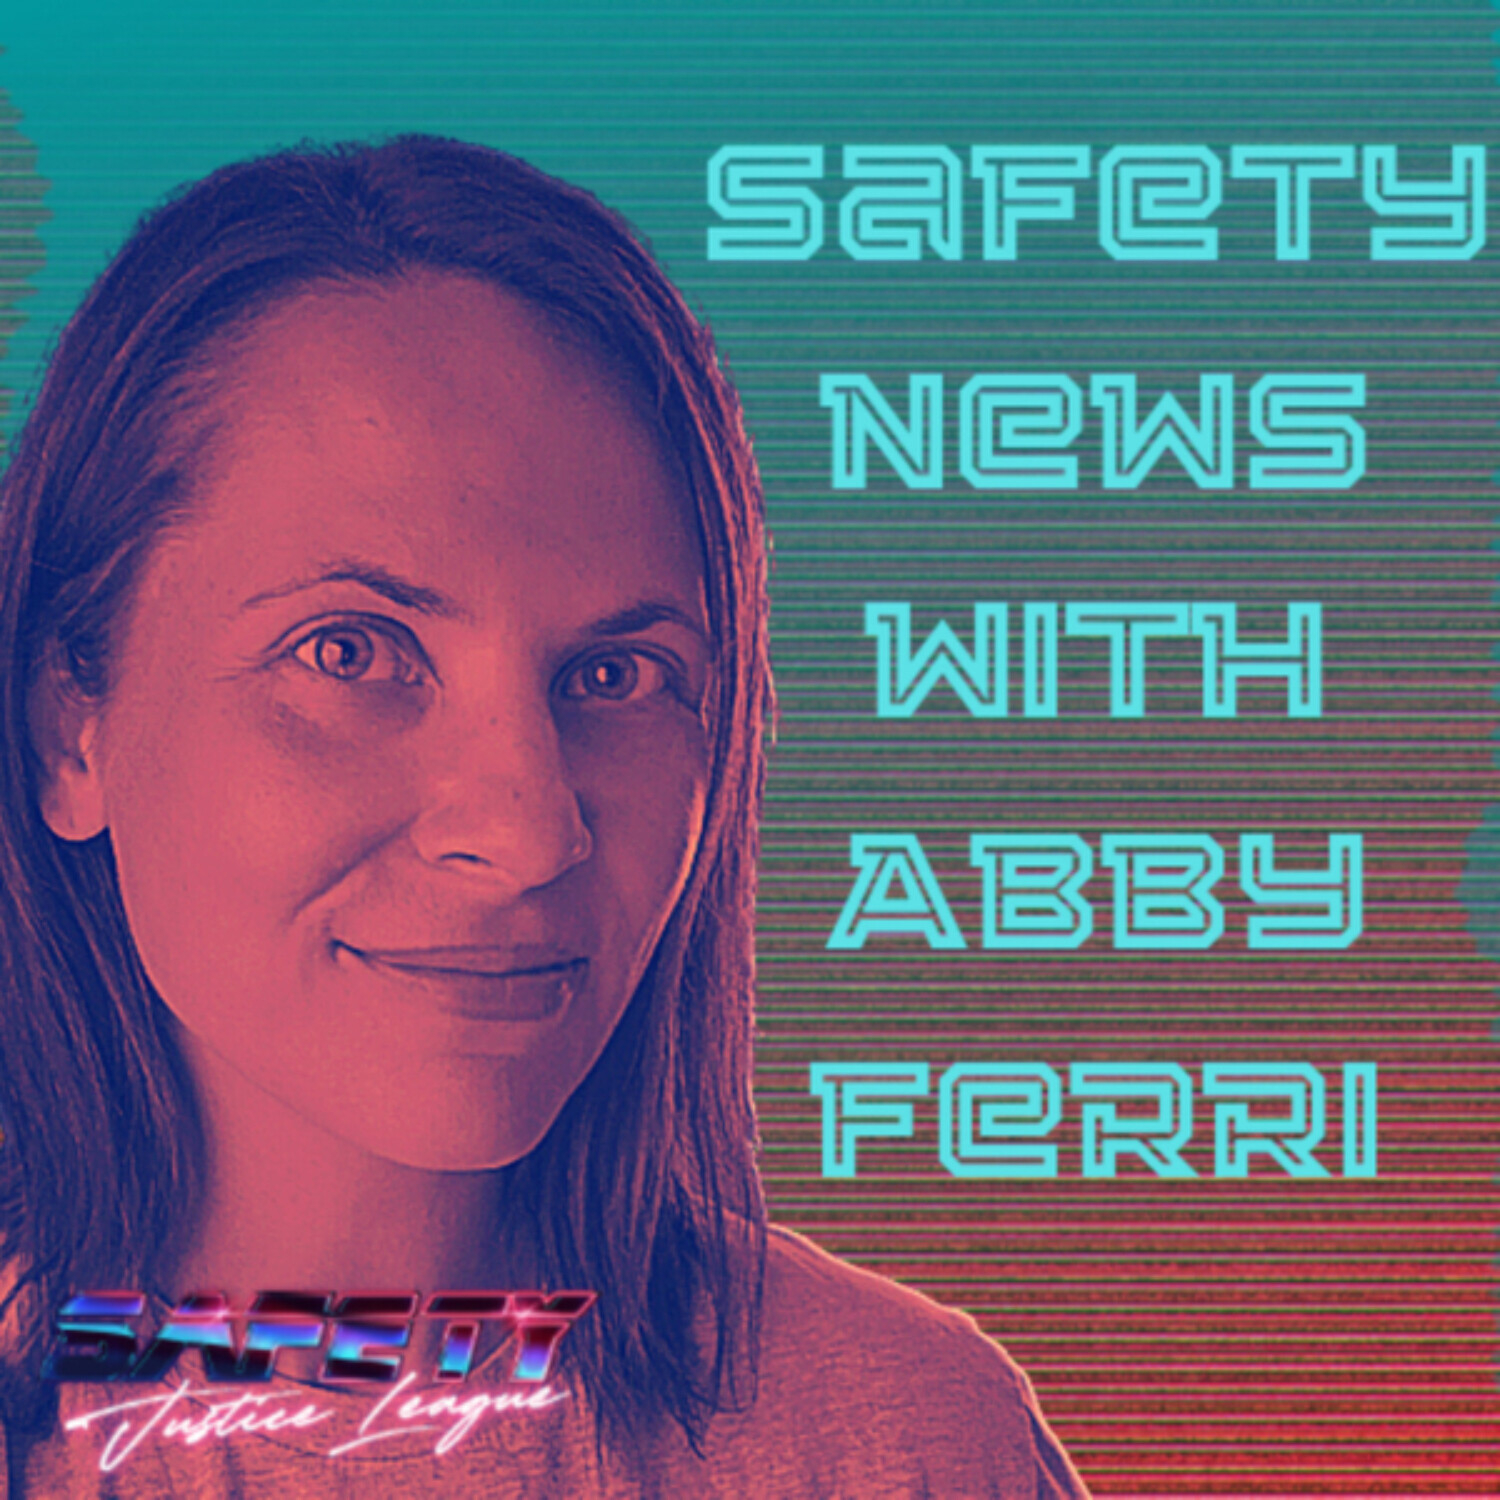 SJL Sh0rts: Safety News w/ Abby Ferri - July 13th Edition